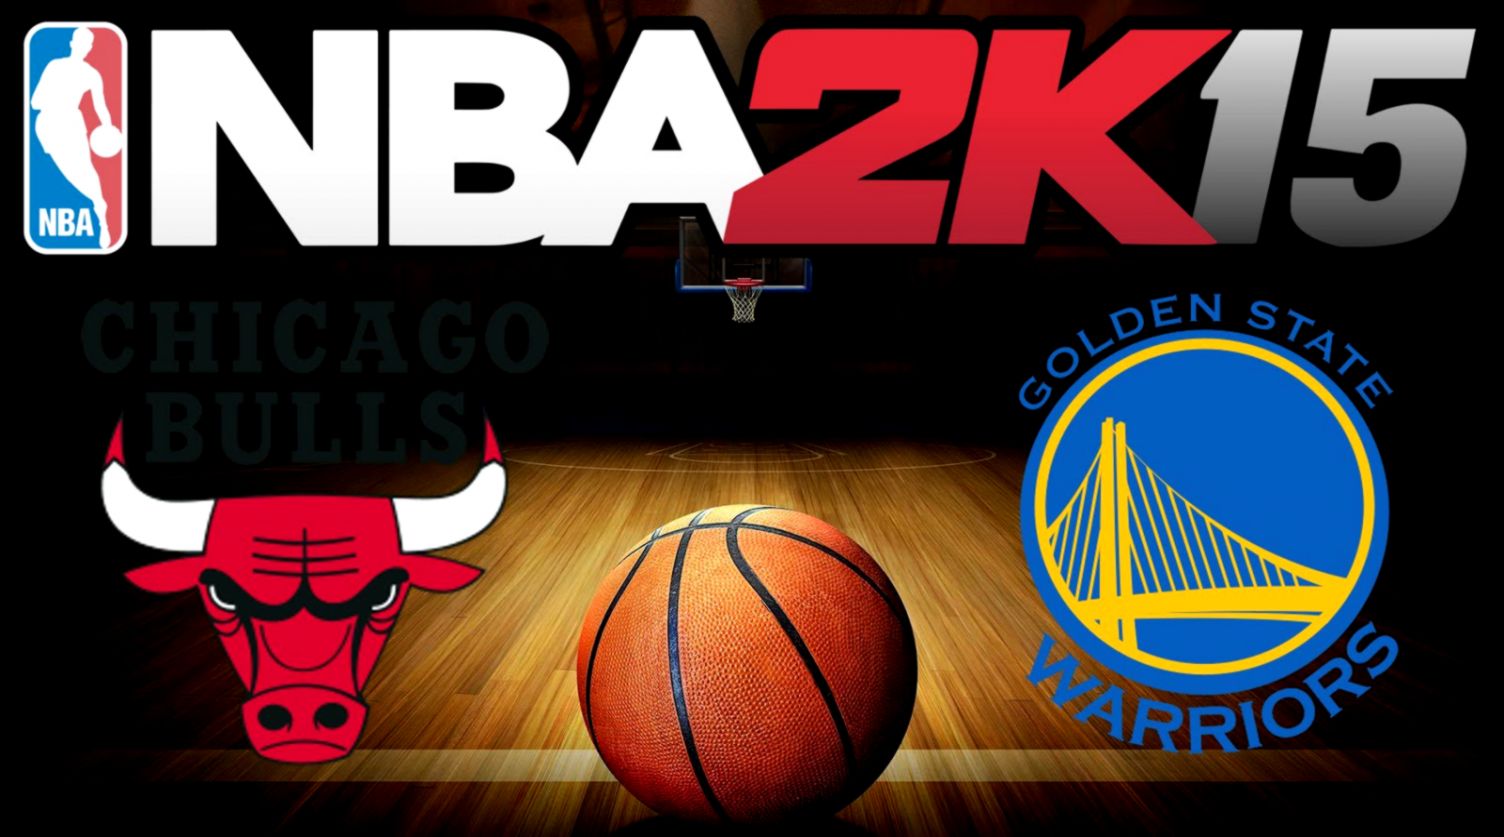 Chicago Bulls vs Golden State Warriors Live Stream | FBStreams Link 2